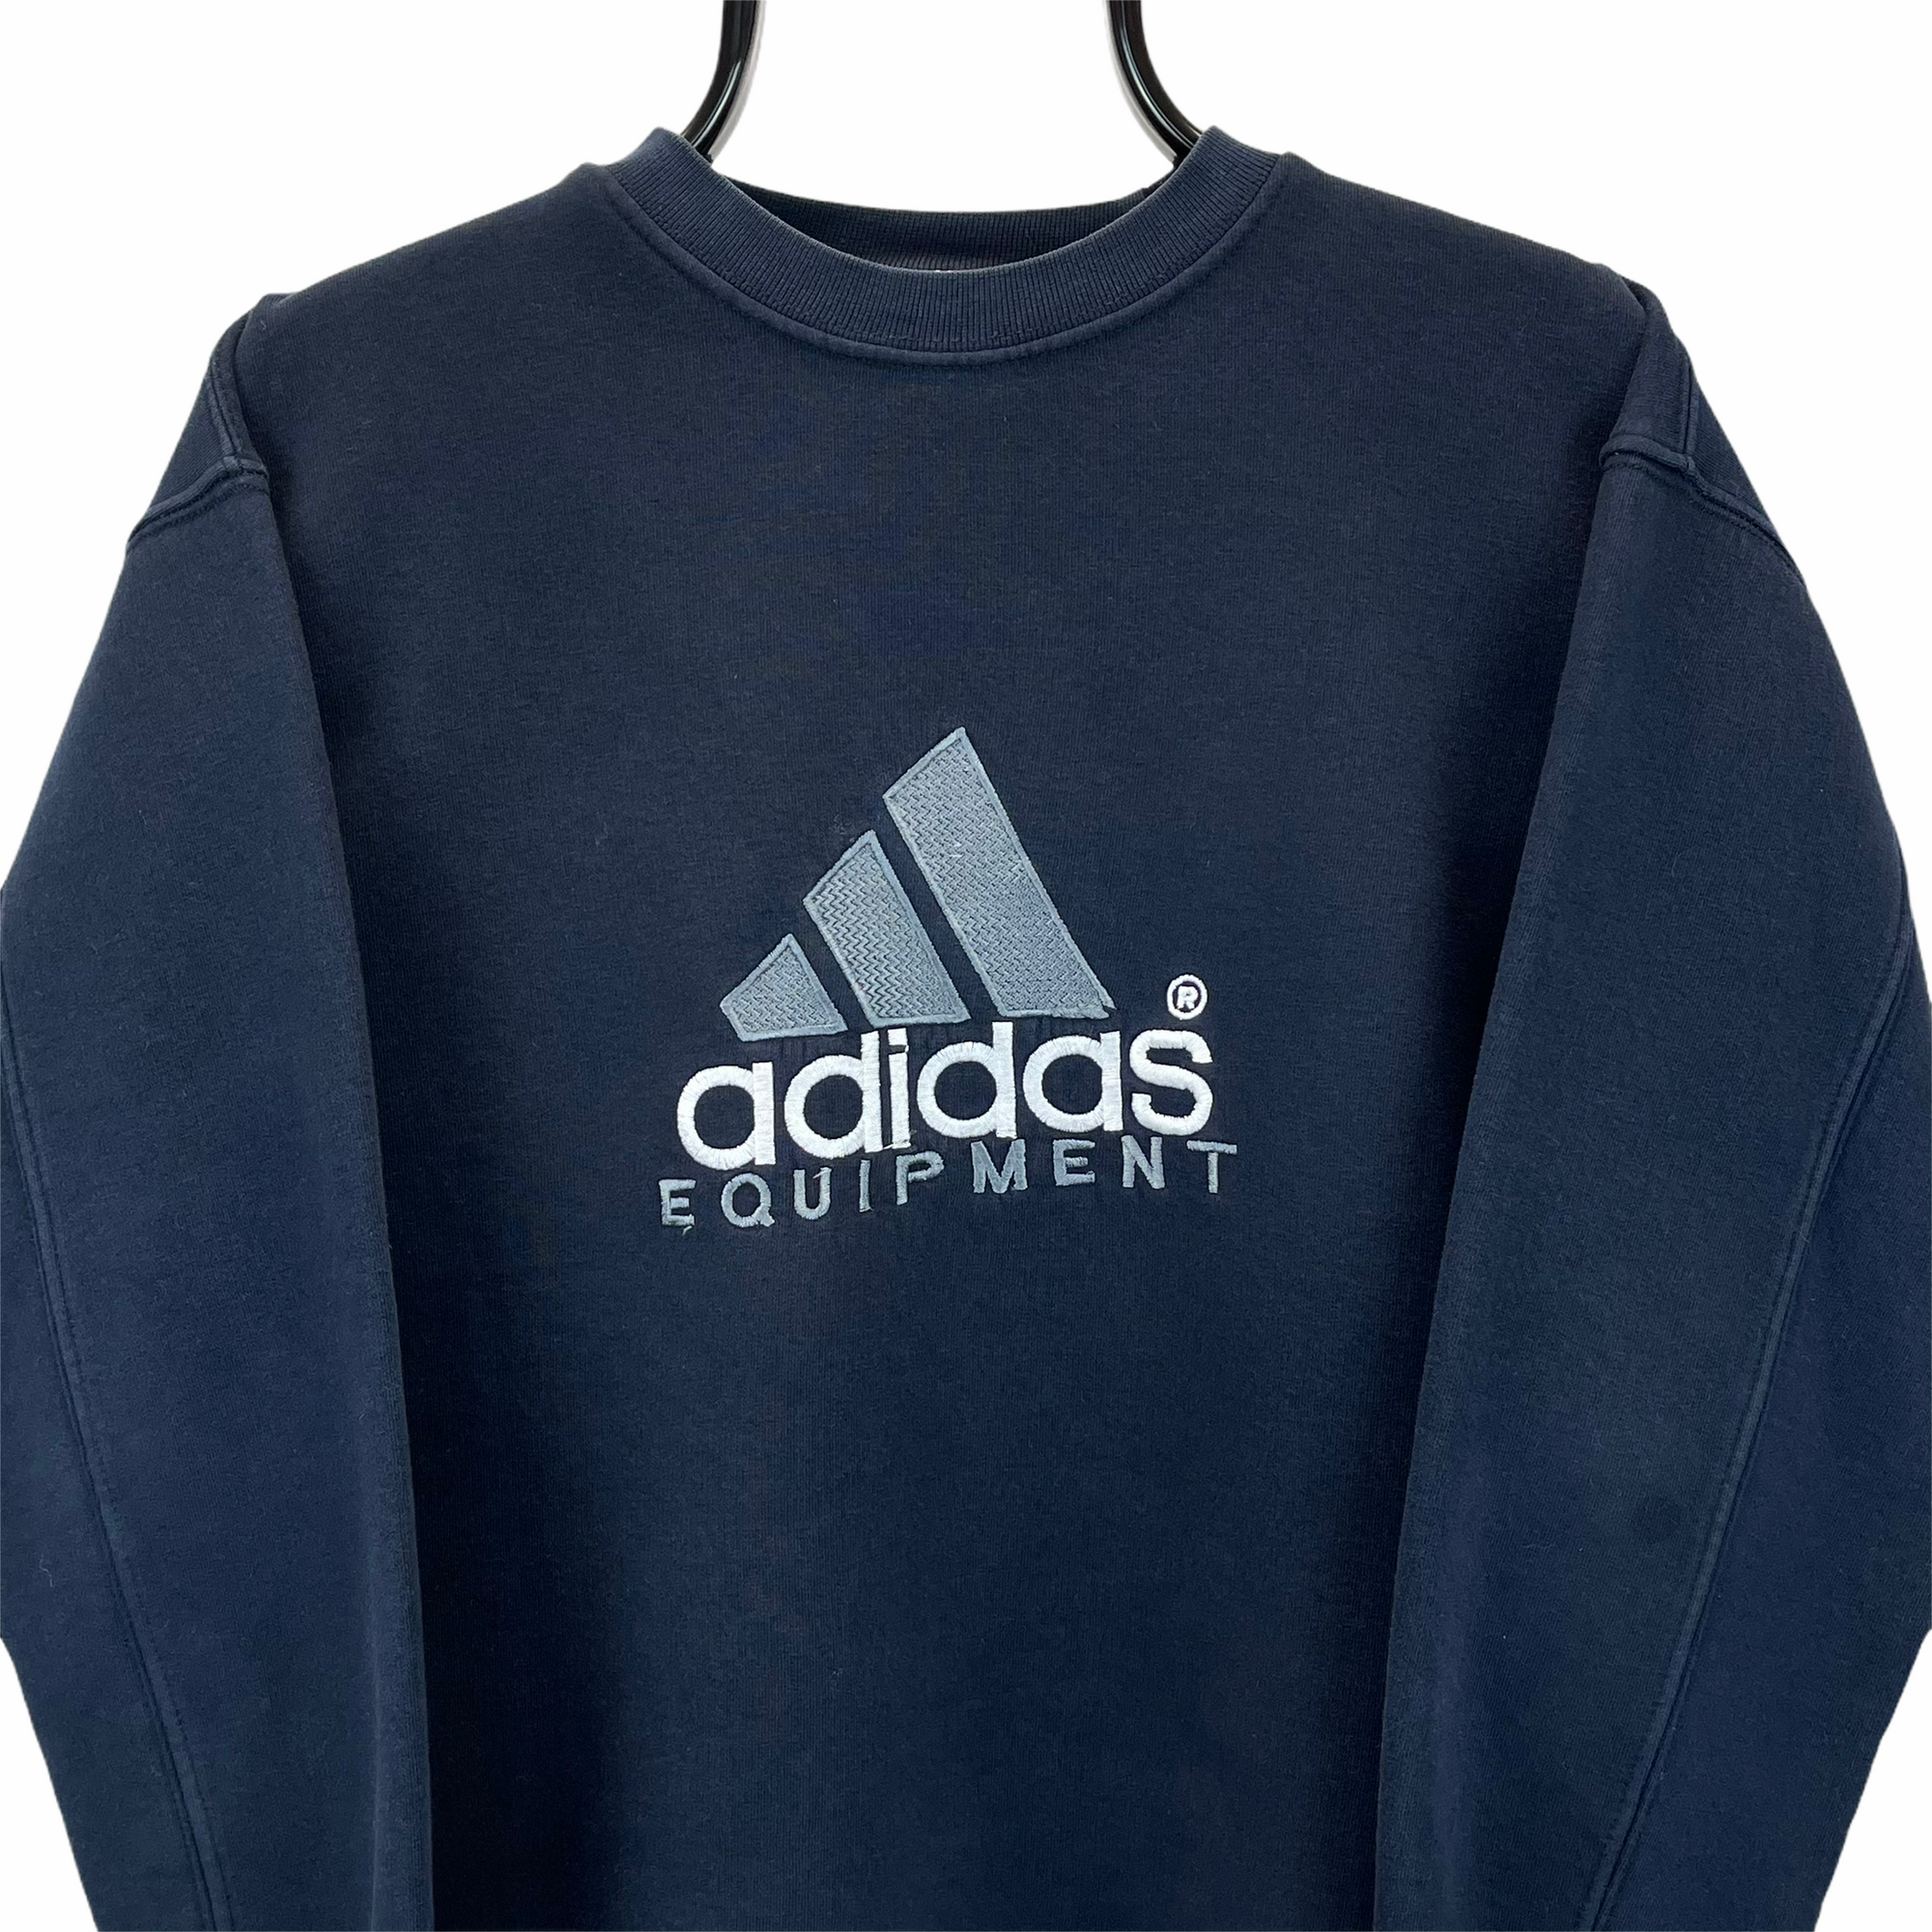 Vintage 90s Adidas Equipment Sweatshirt in Navy - Men's Small/Women's Medium